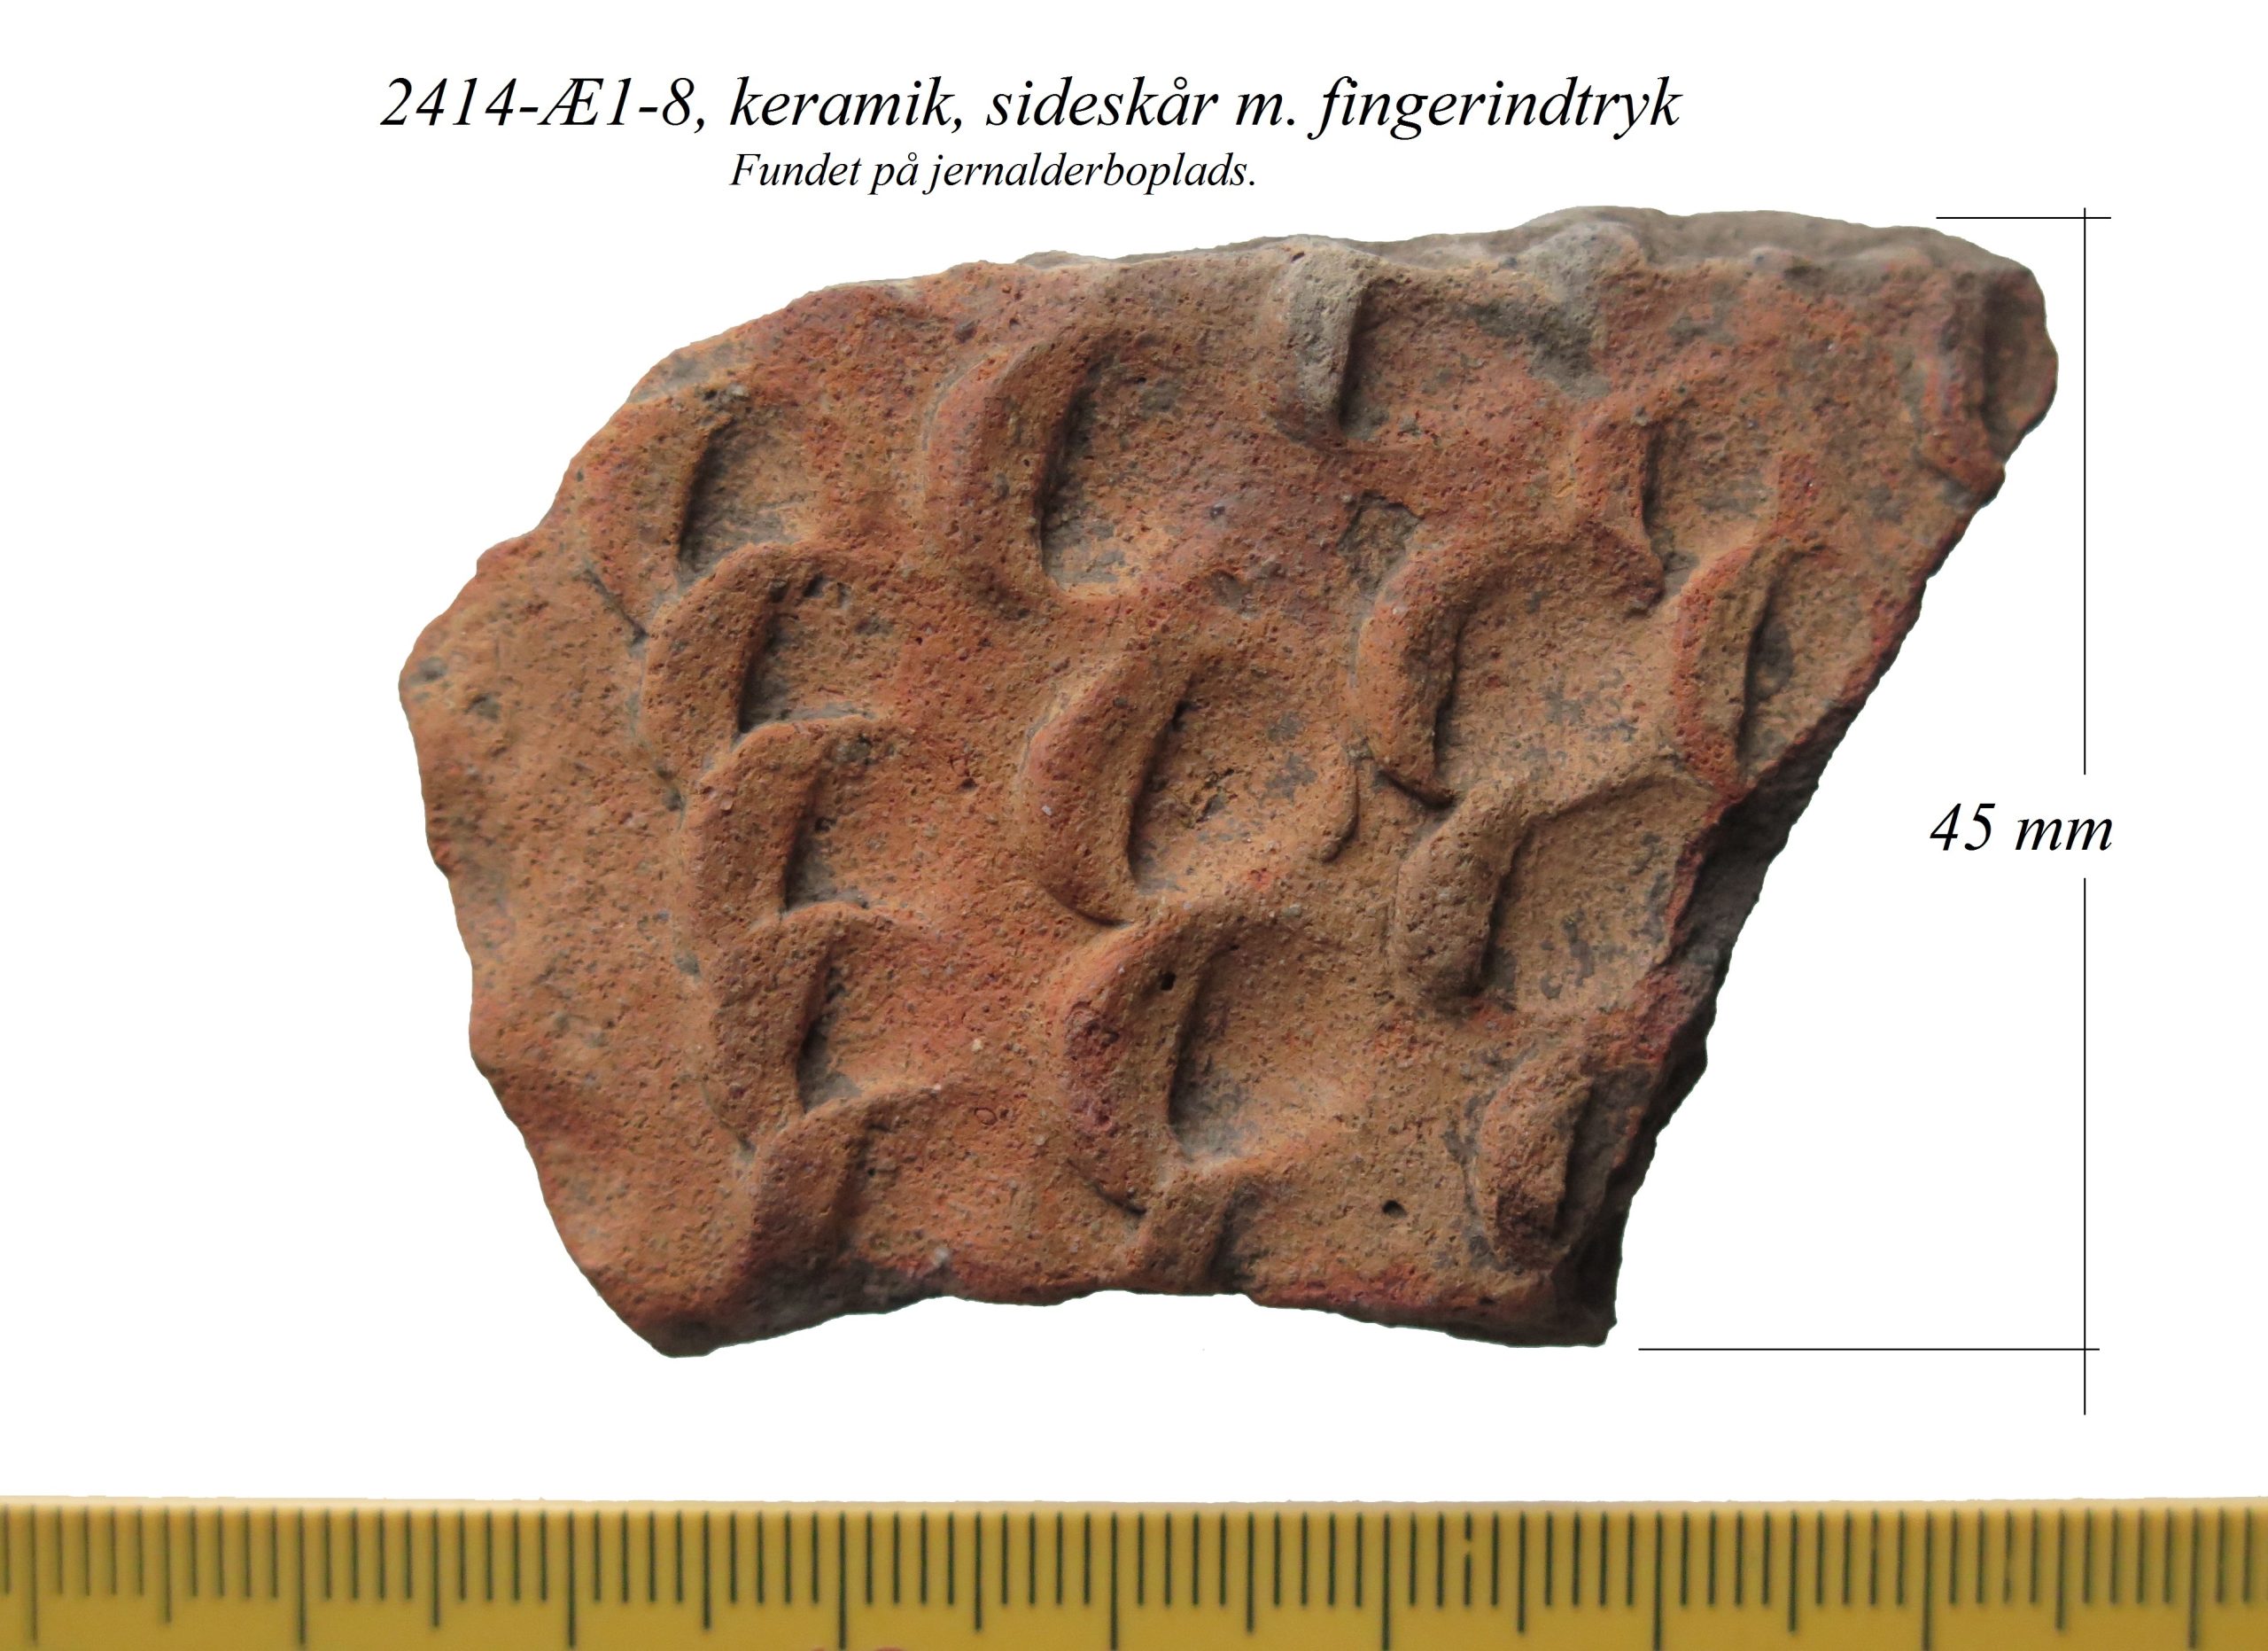 2414-Æ1-8, keramik, sideskår m. fingerindtryk, Kærbygaard (4)